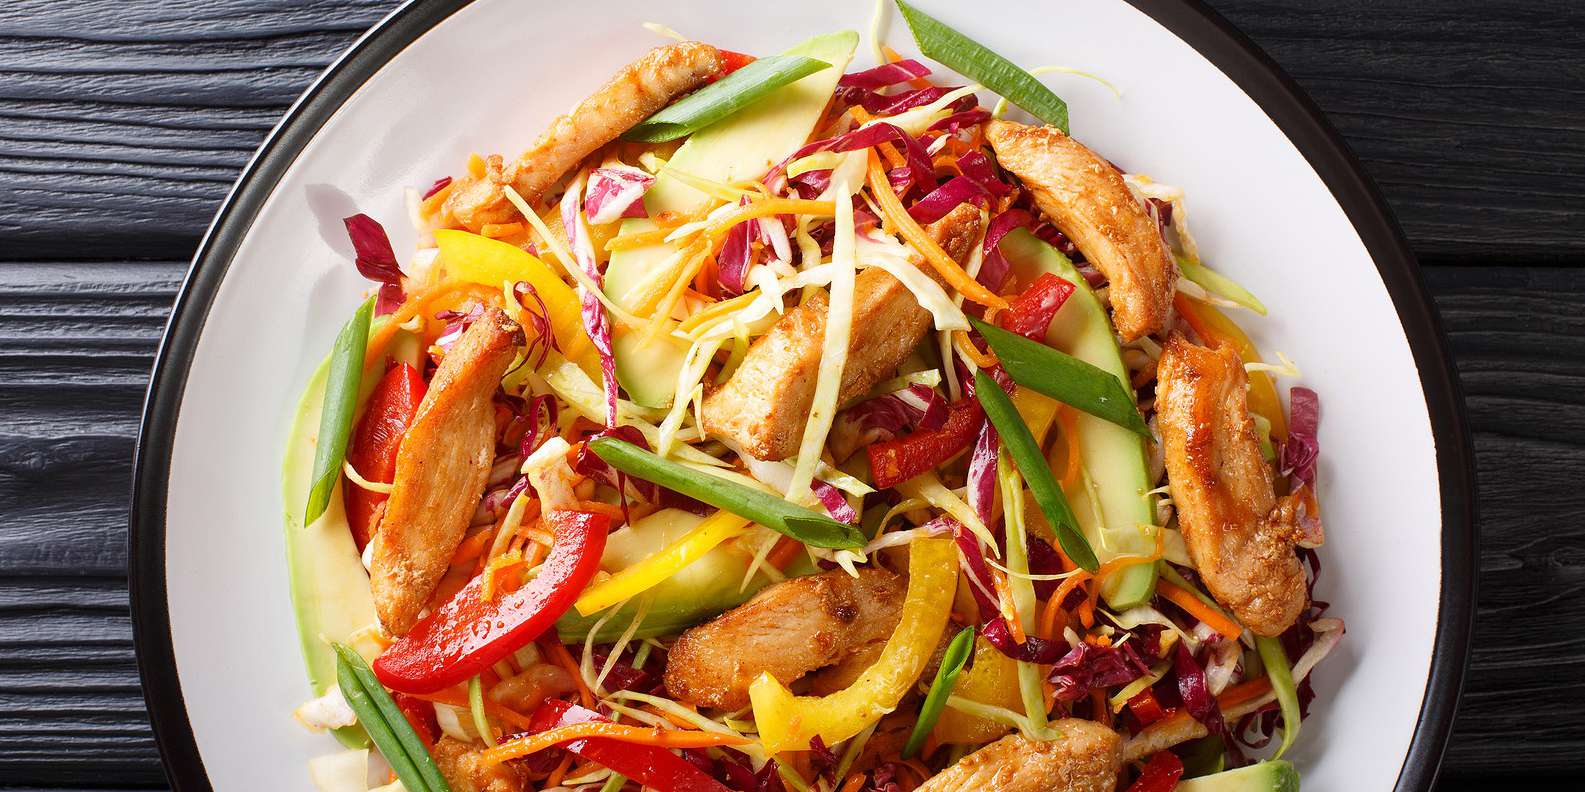 Asian Chicken Napa Salad